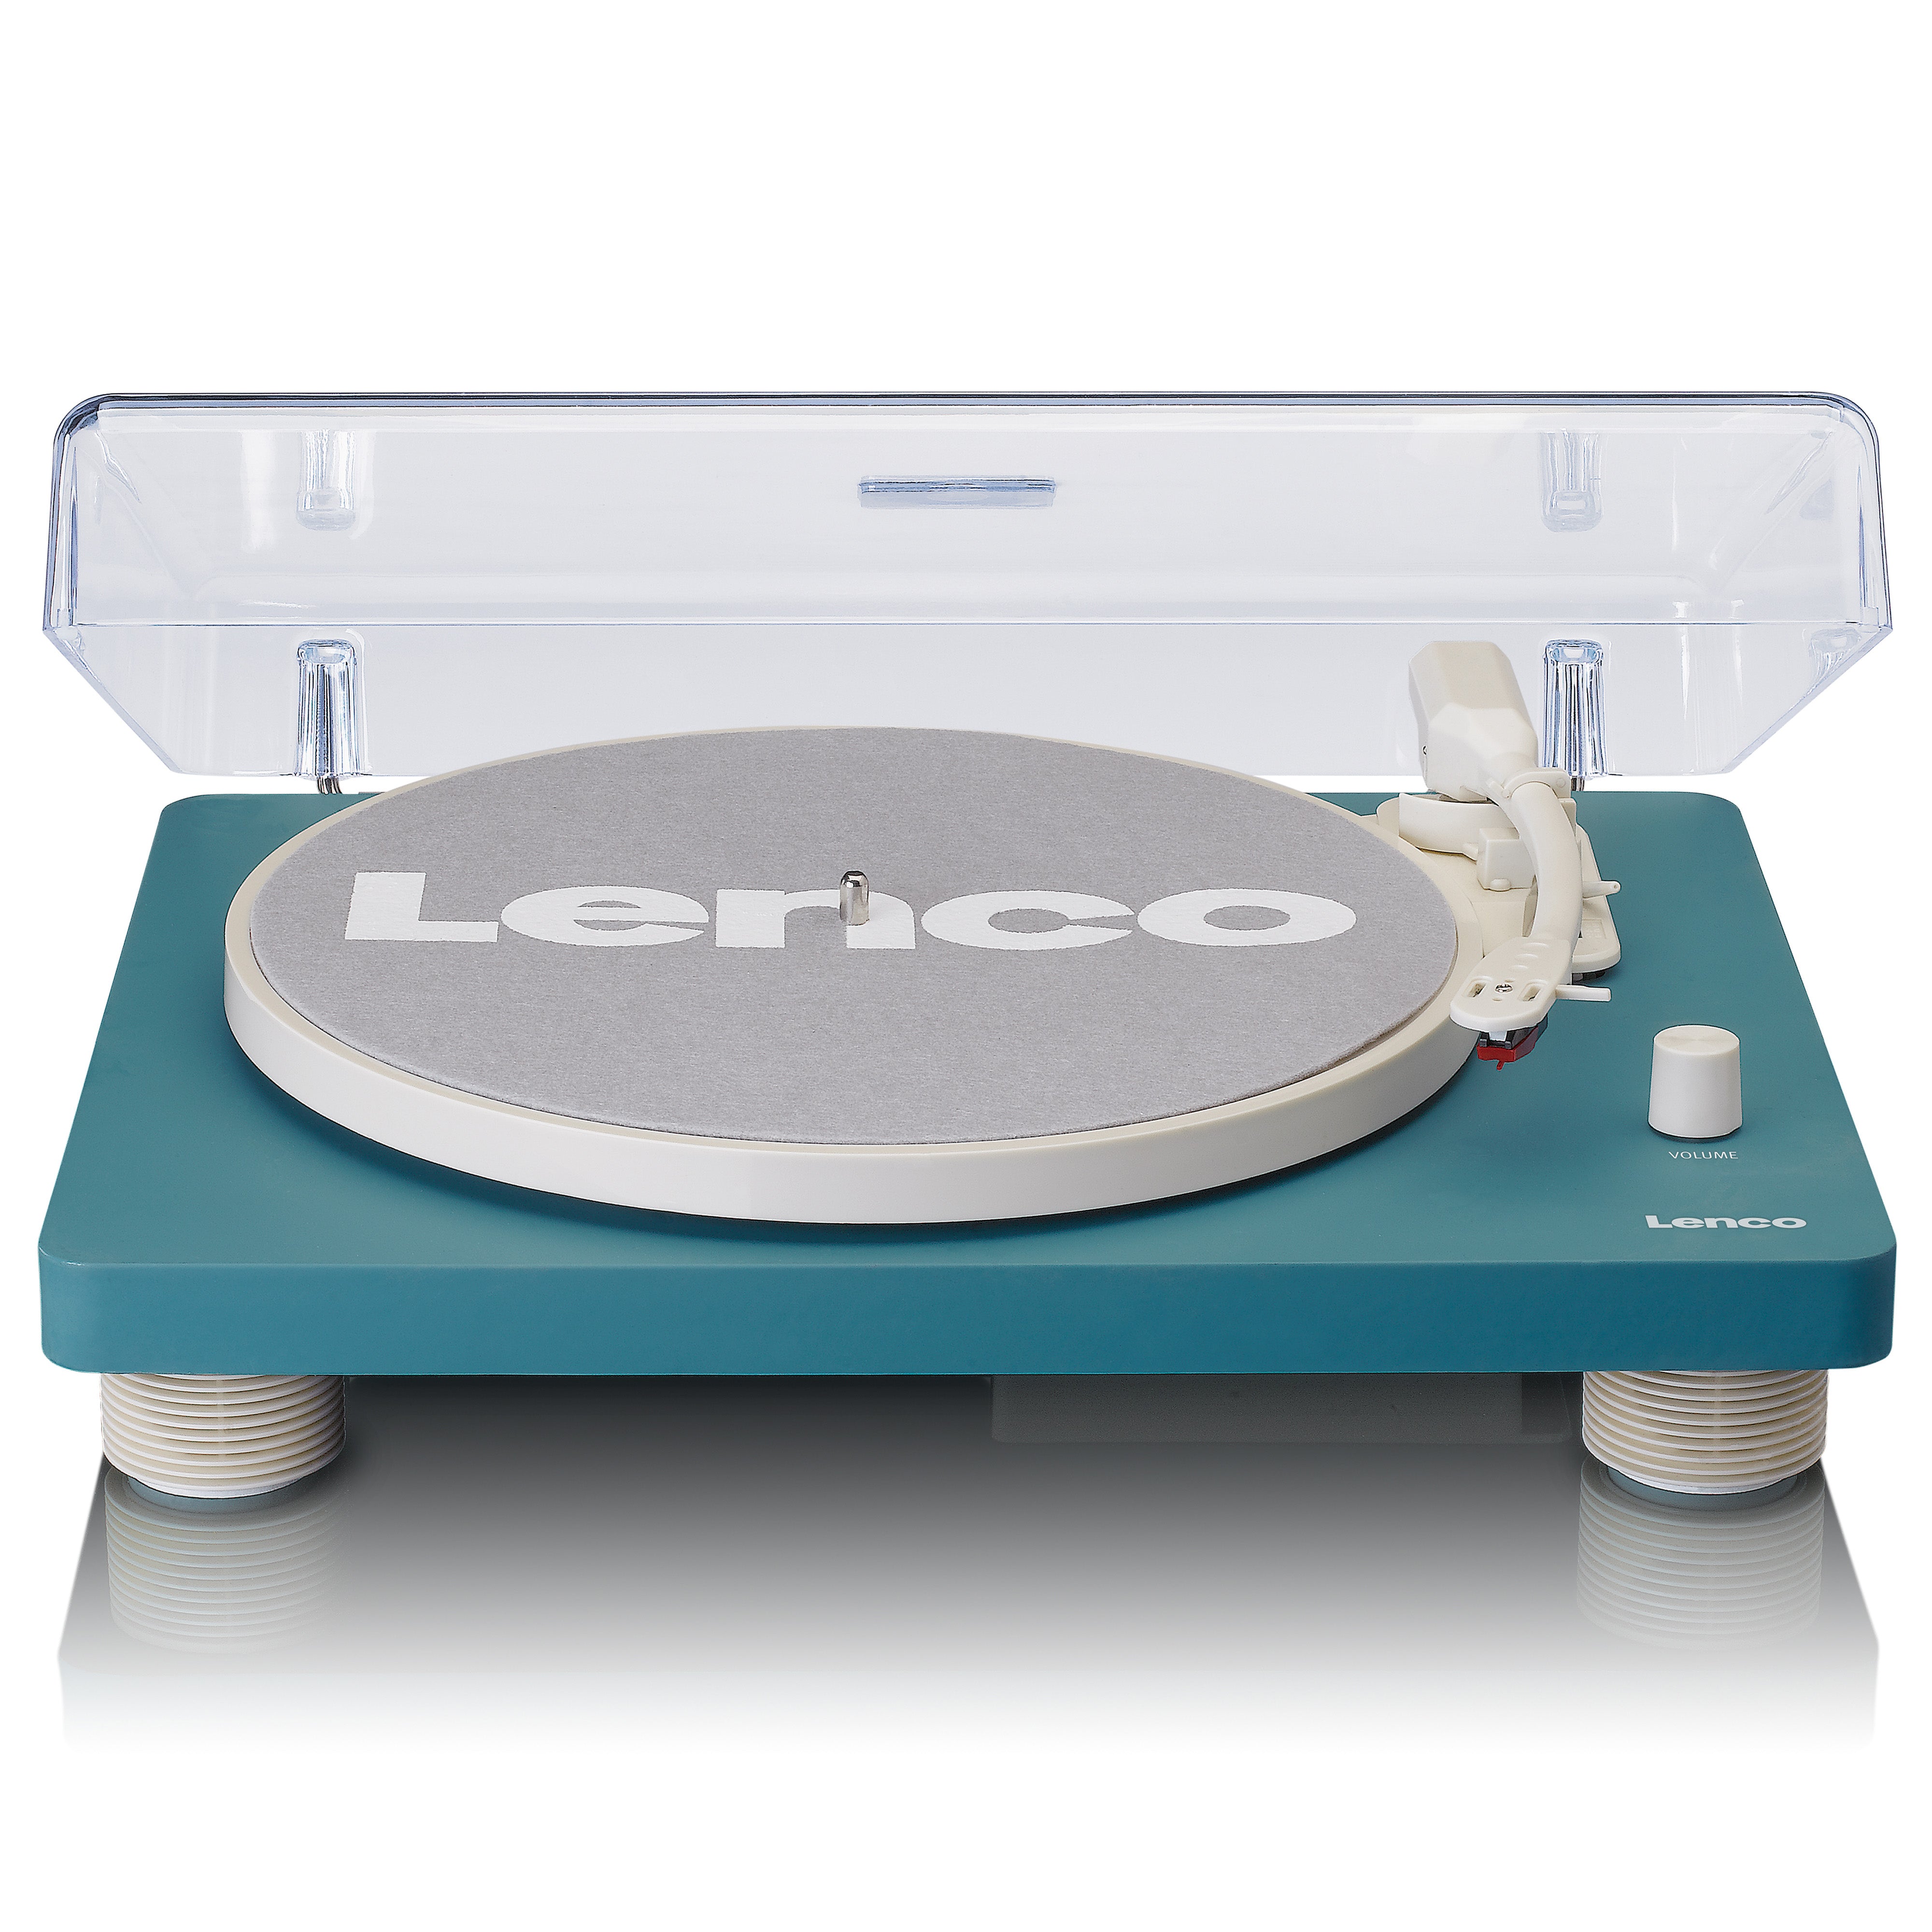 Webshop offiziellen im | – - Offizieller LS-50TQ Lenco kaufen? Webshop Lenco Lenco.de Jetzt